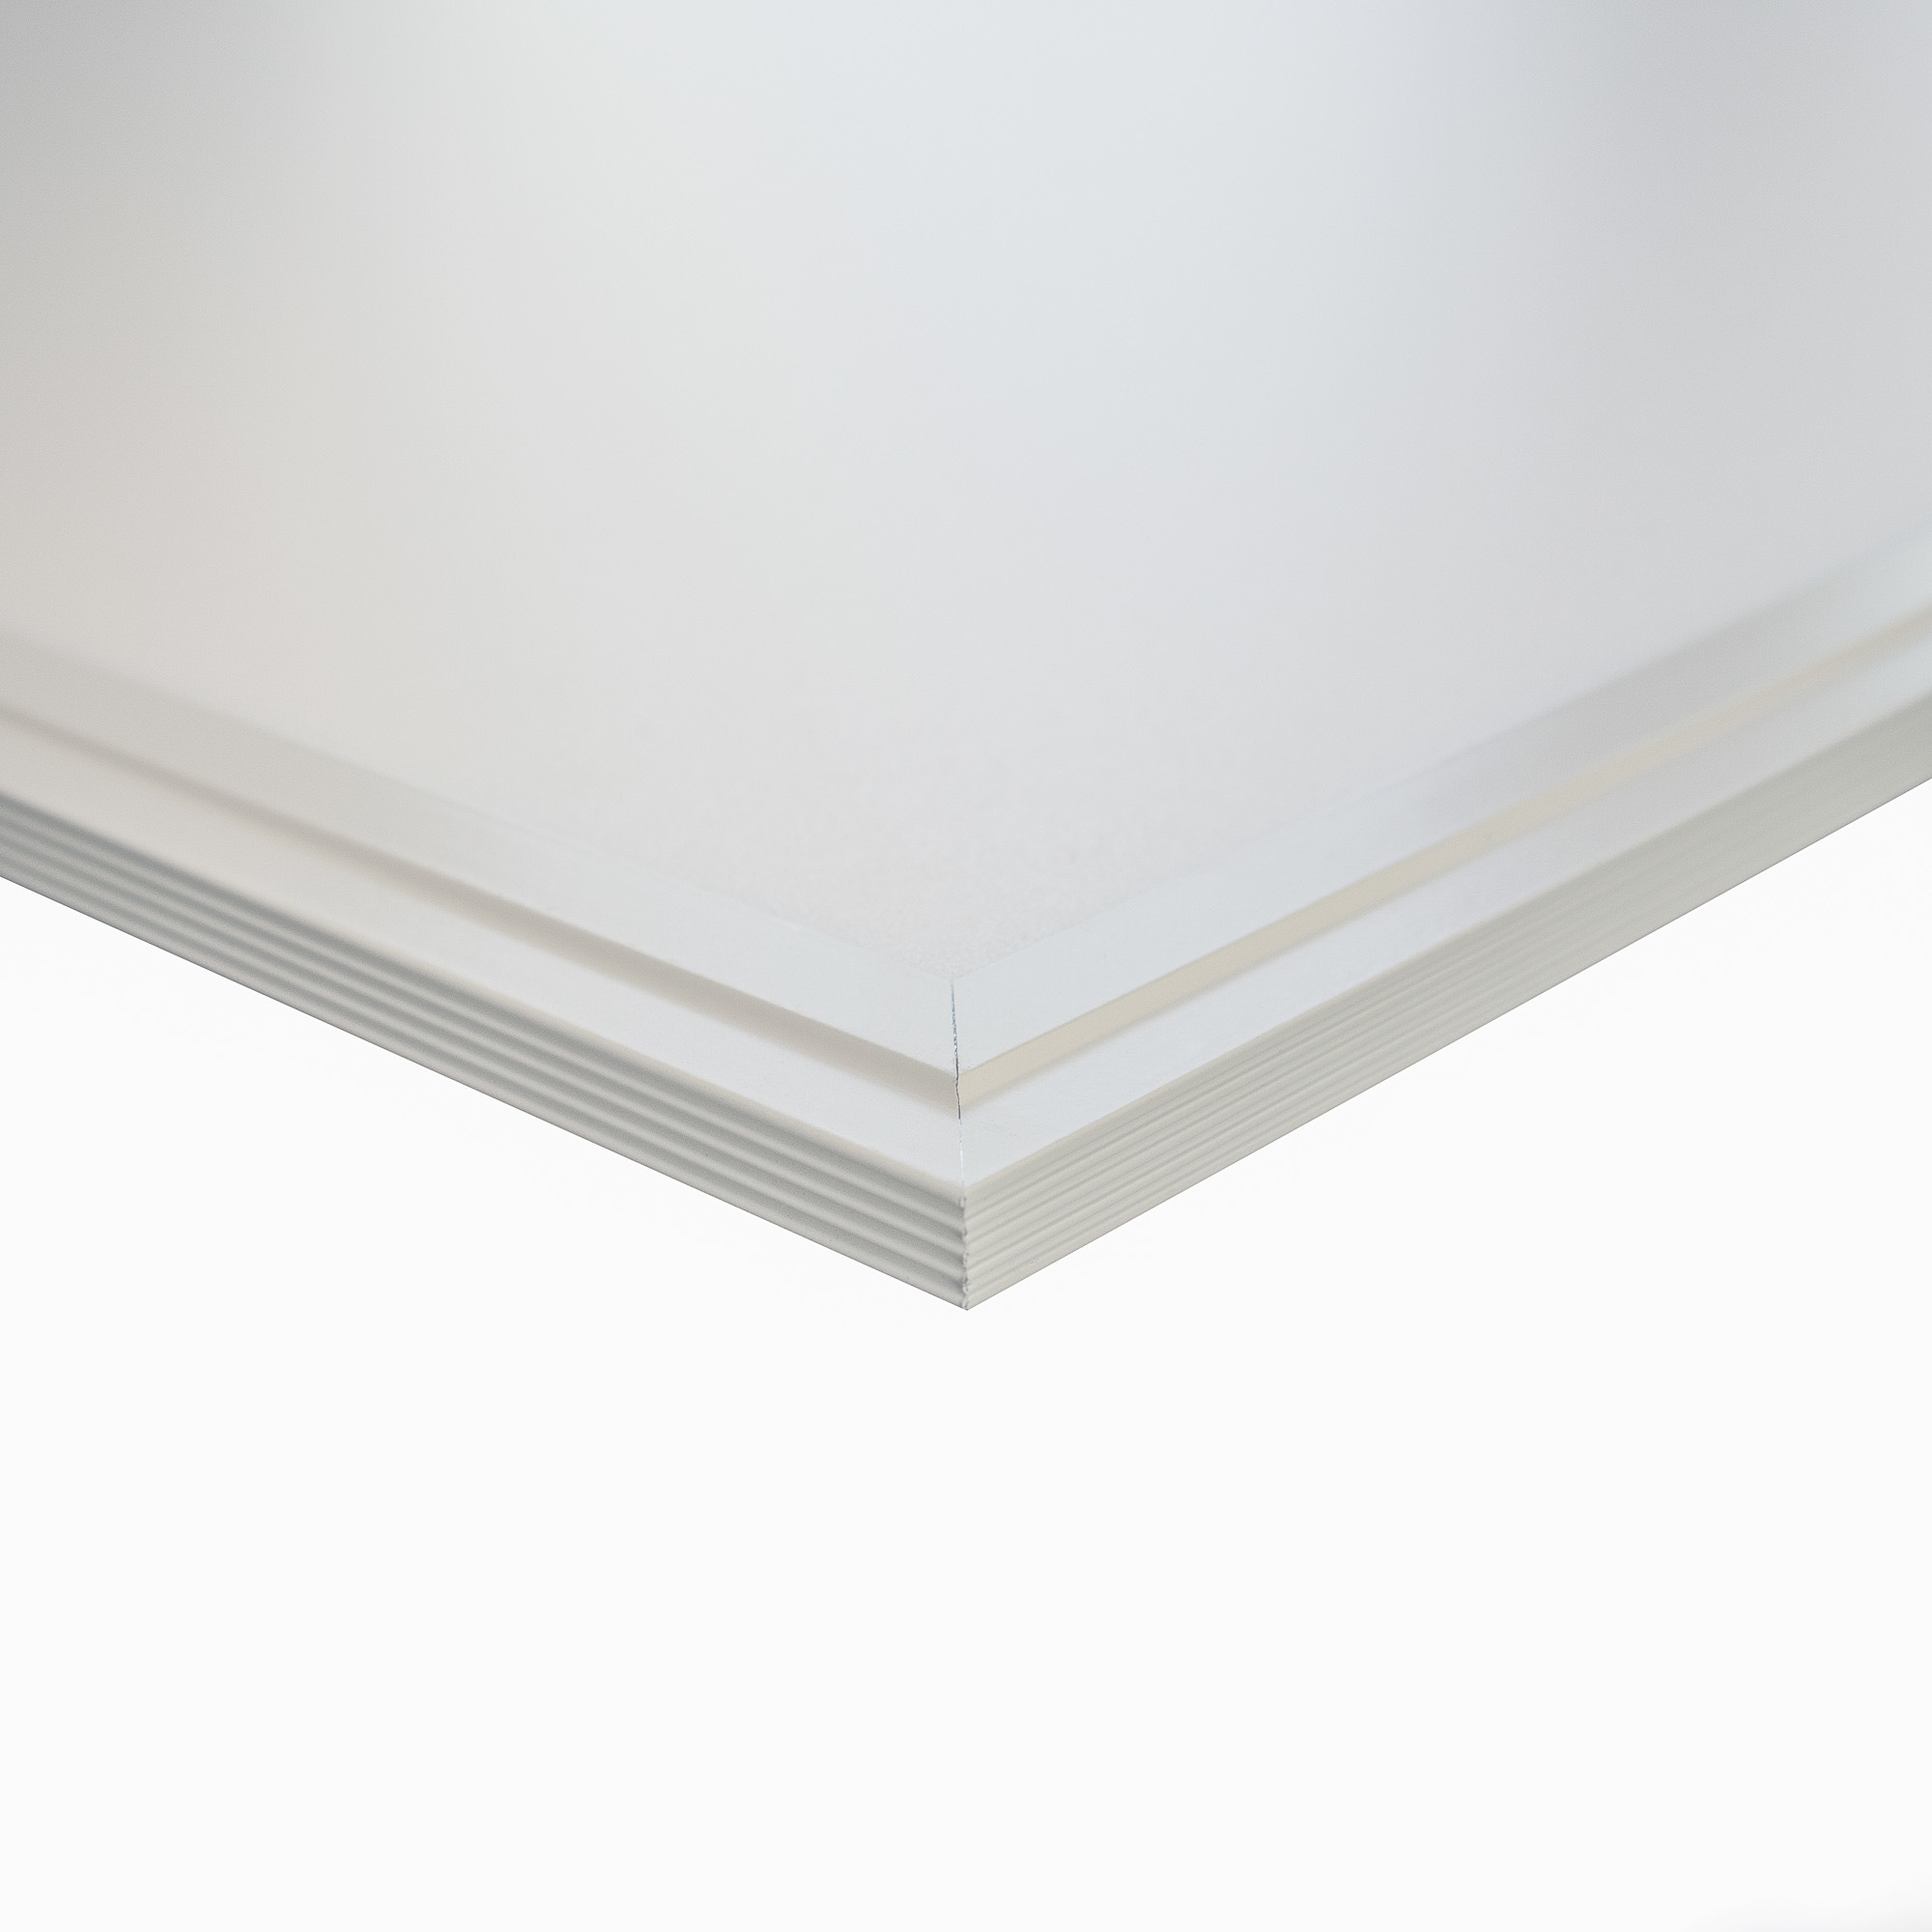 LED-Panel 62x62 45W, warm white, white 2 pcs.